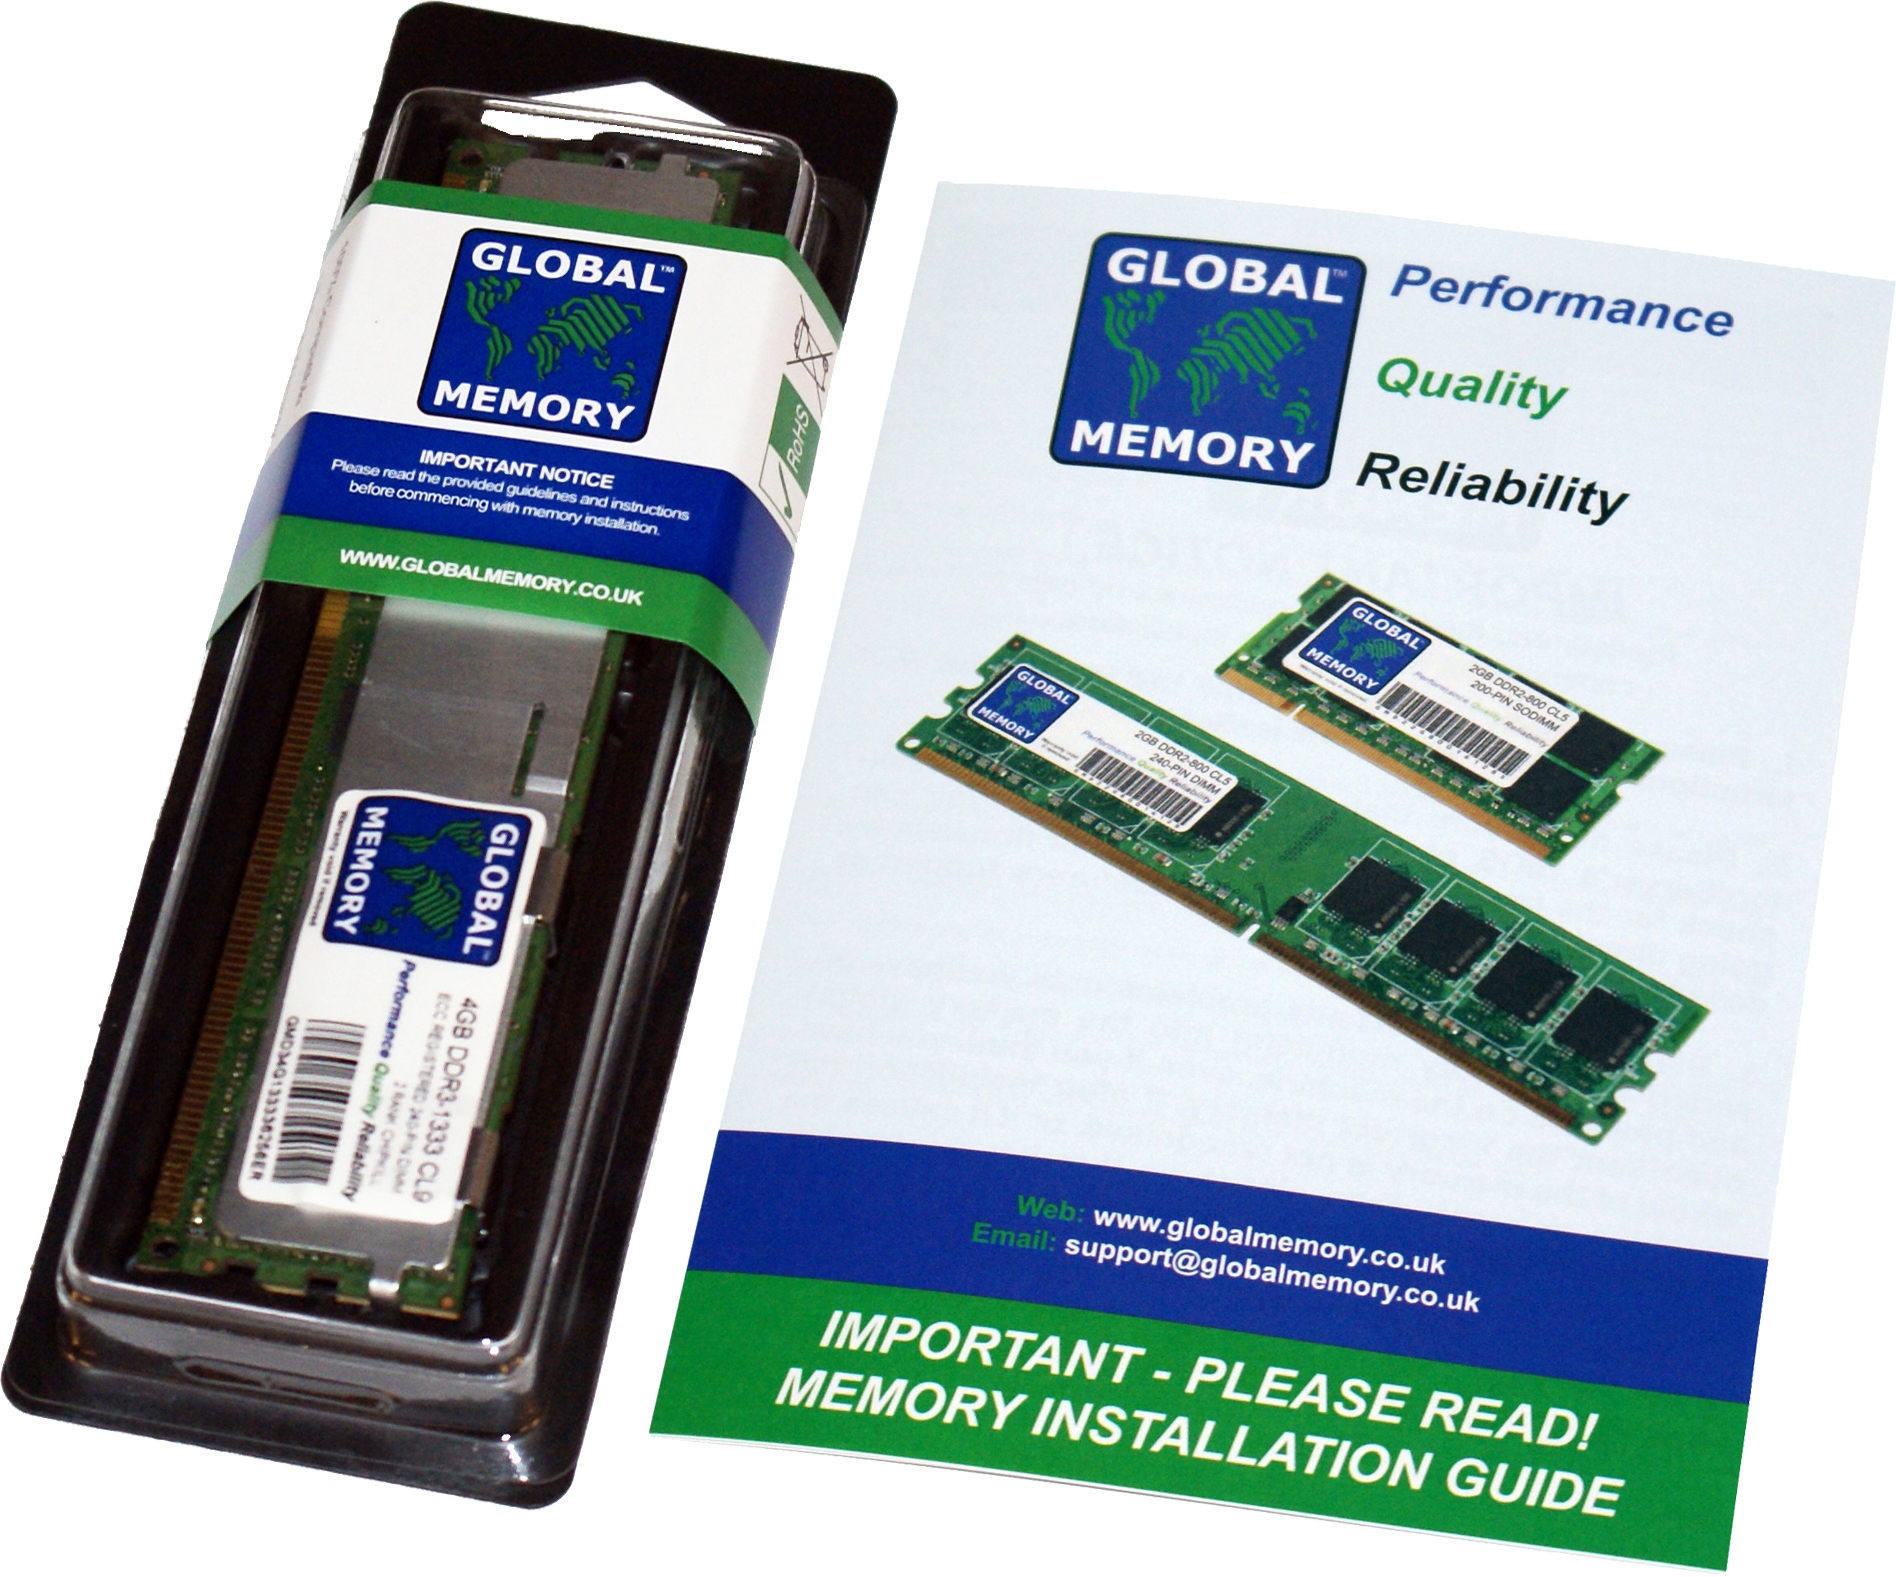 16GB DDR3 1333MHz PC3-10600 240-PIN ECC REGISTERED DIMM (RDIMM) MEMORY RAM FOR IBM/LENOVO SERVERS/WORKSTATIONS (4 RANK NON-CHIPKILL)